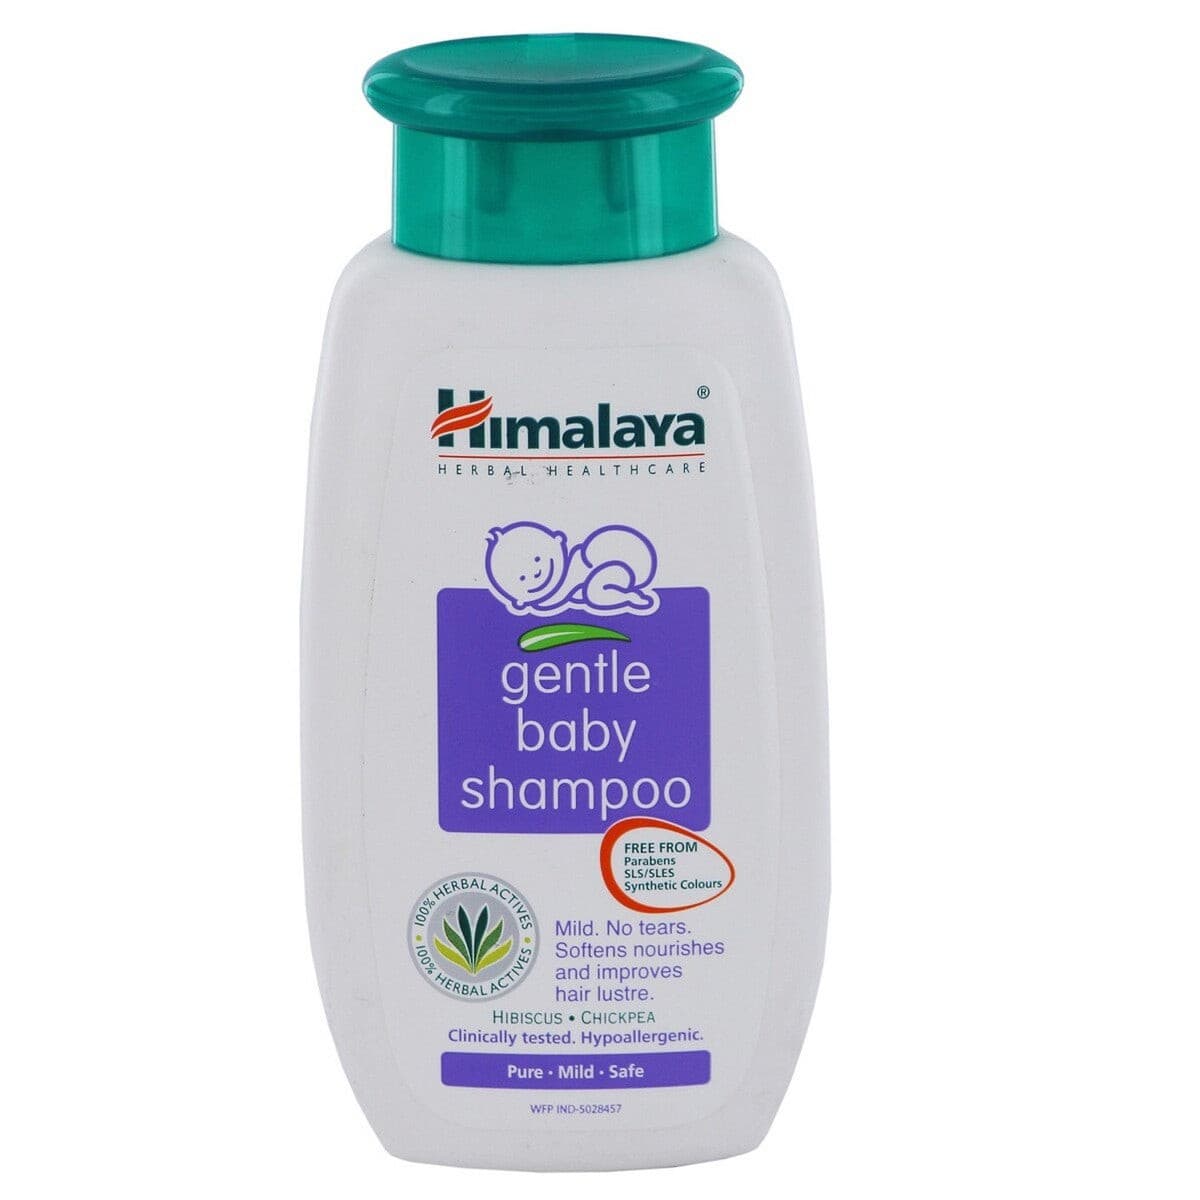 Himalaya baby Shampoo.